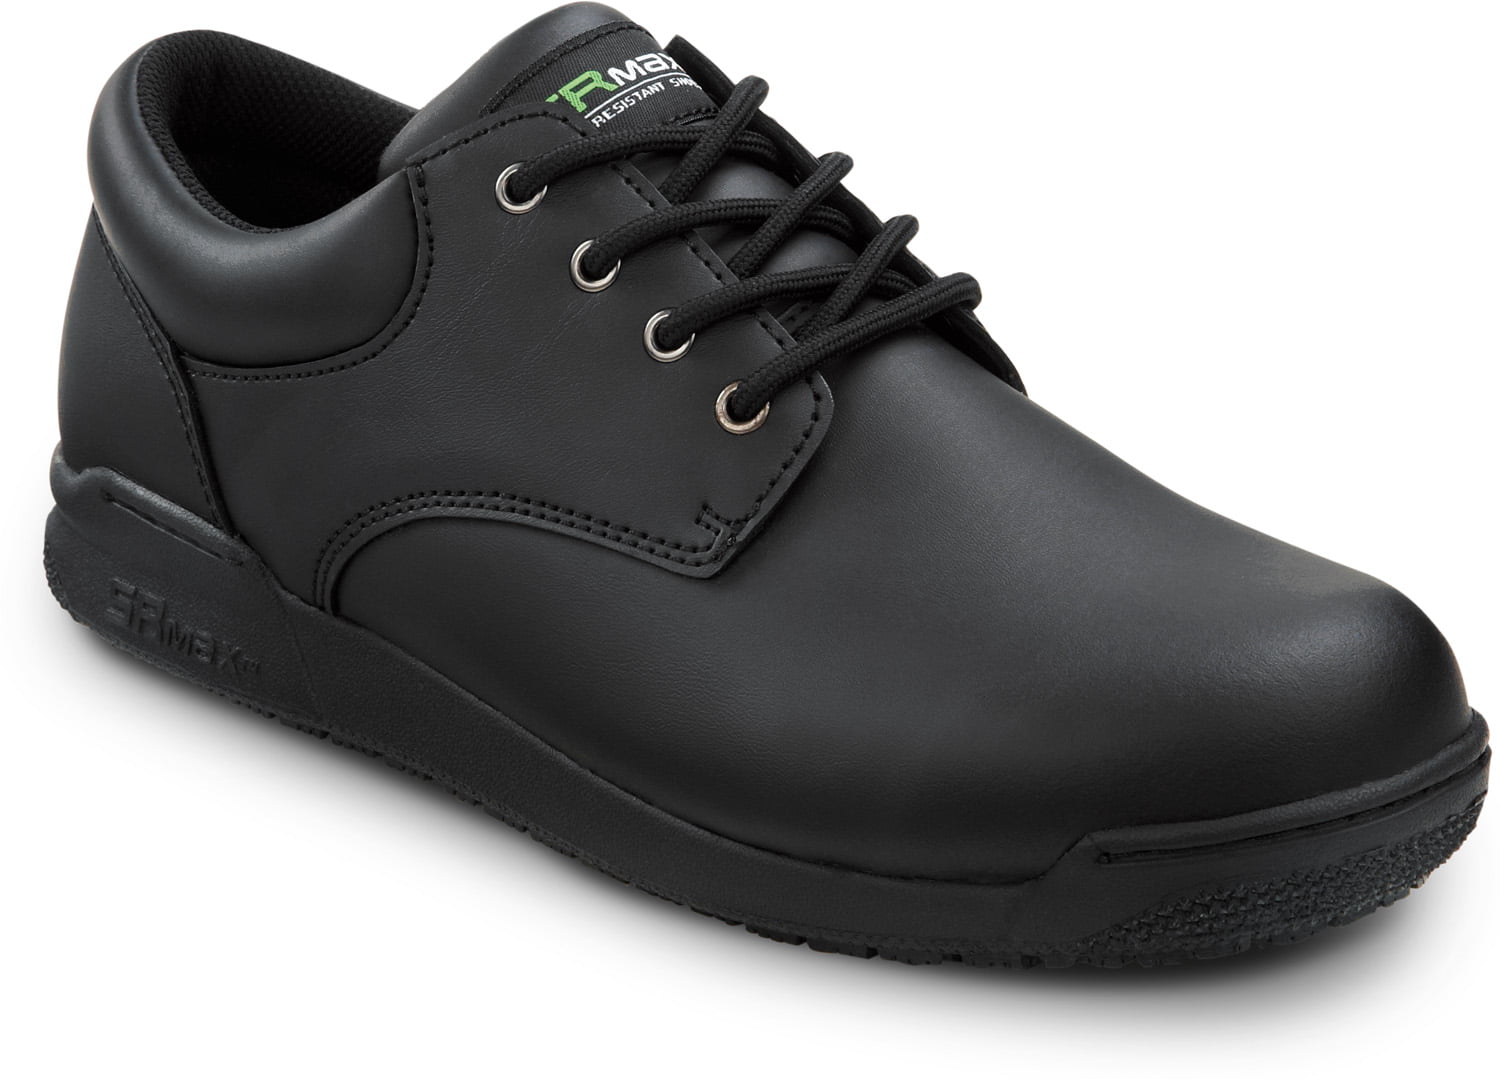 SR Max Jackson Chukka Style Soft Toe Slip Resistant Work Shoe Women's Black 